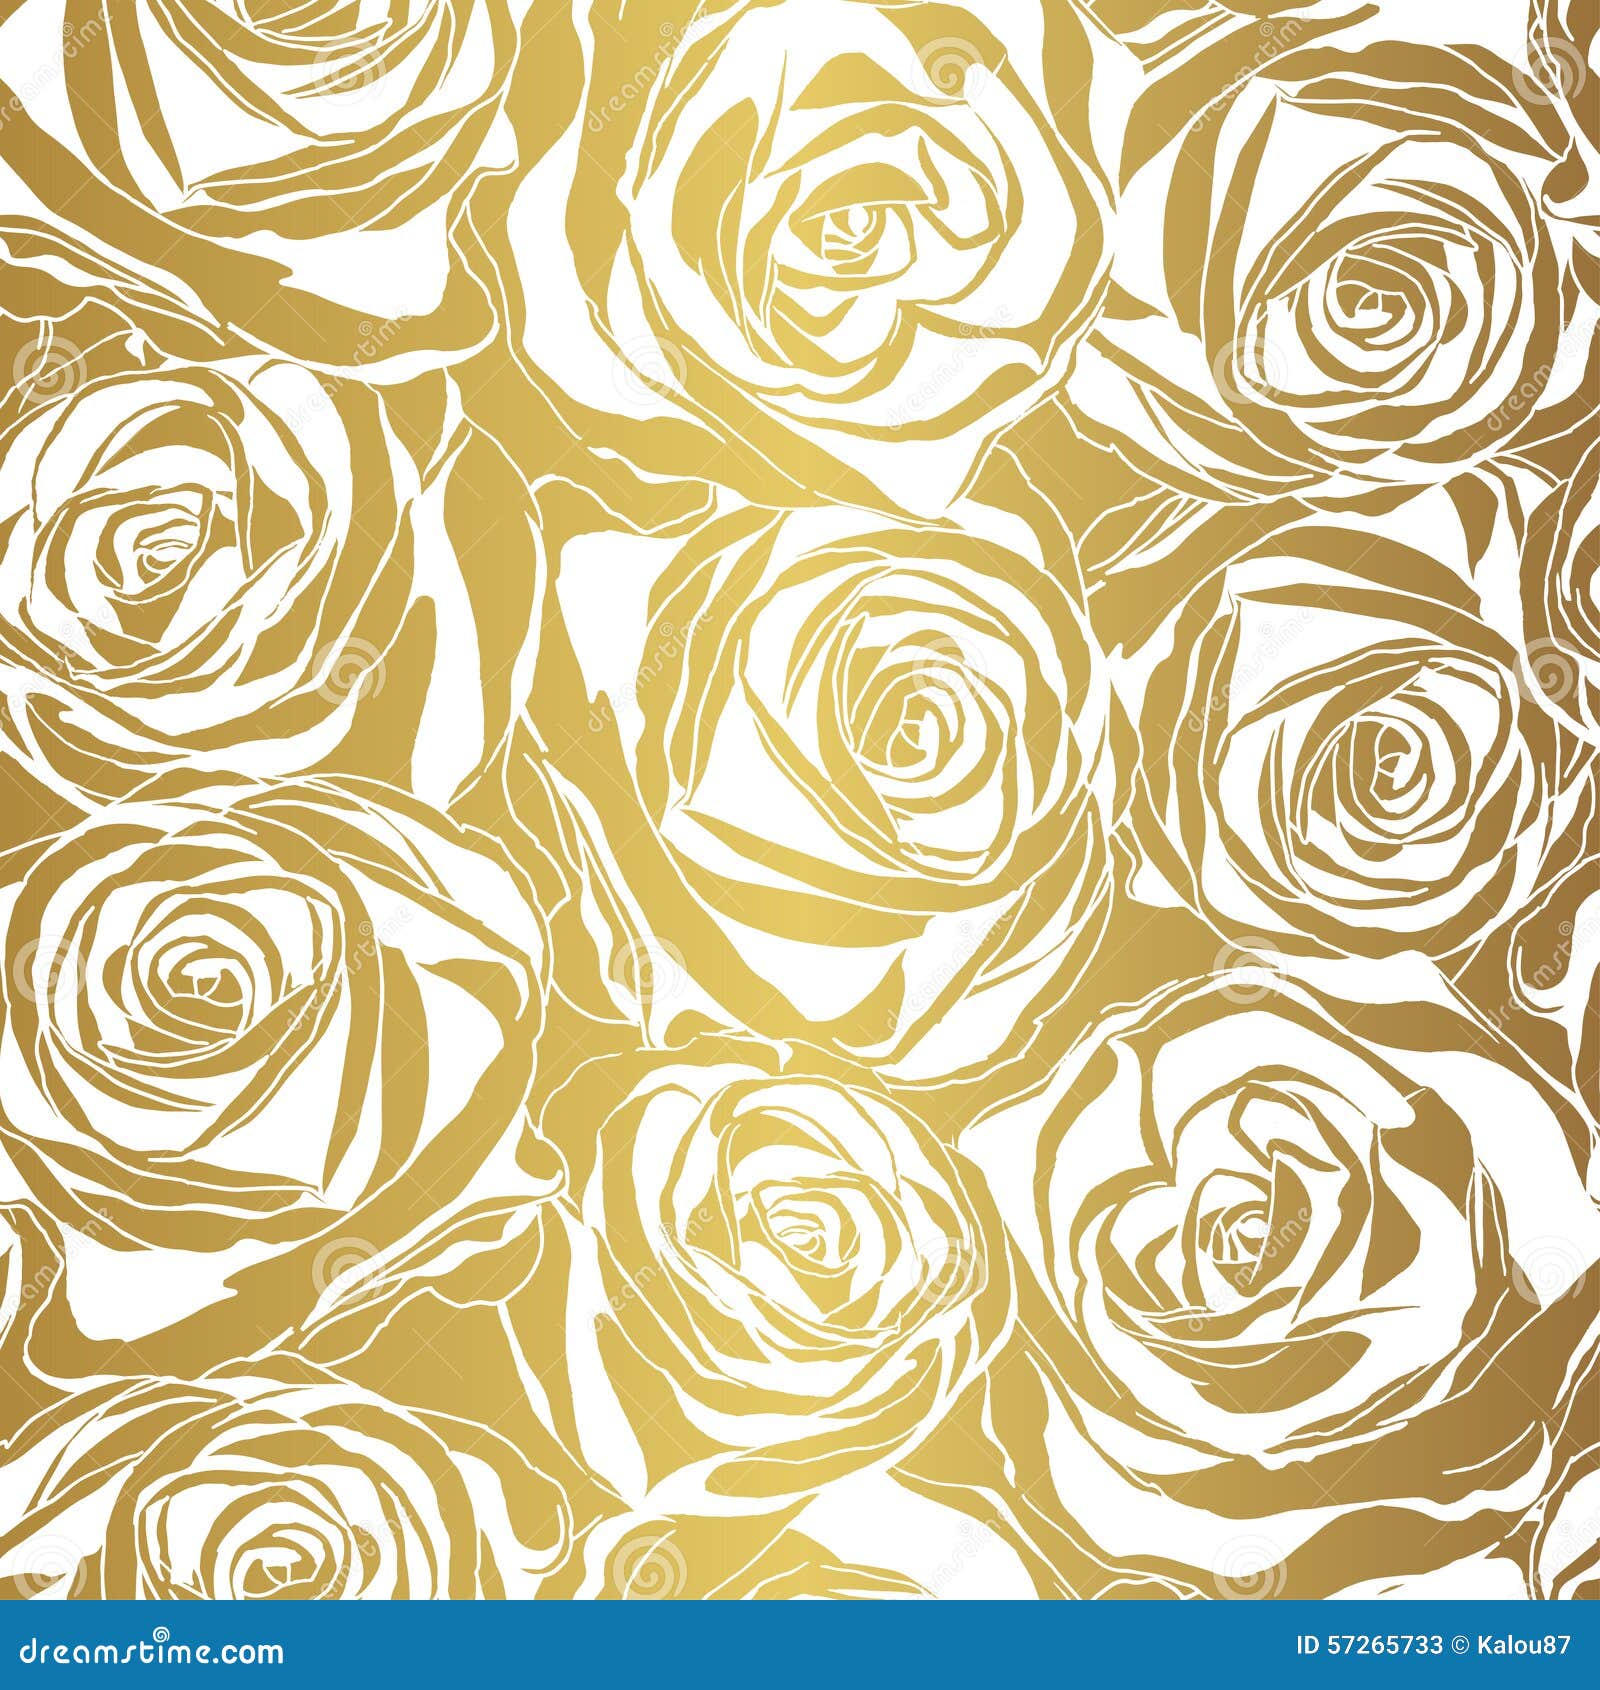 Elegant White Rose Pattern On Gold Background. Stock Vector - Image